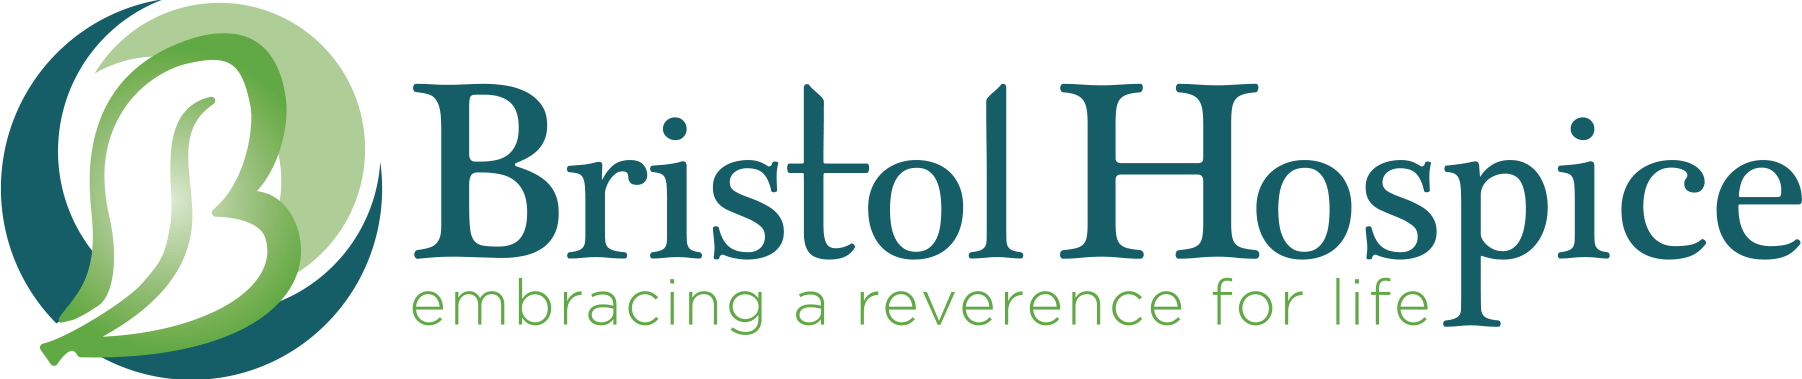 Hospice Logo - Bristol Hospice. Embracing a Reverence for Life